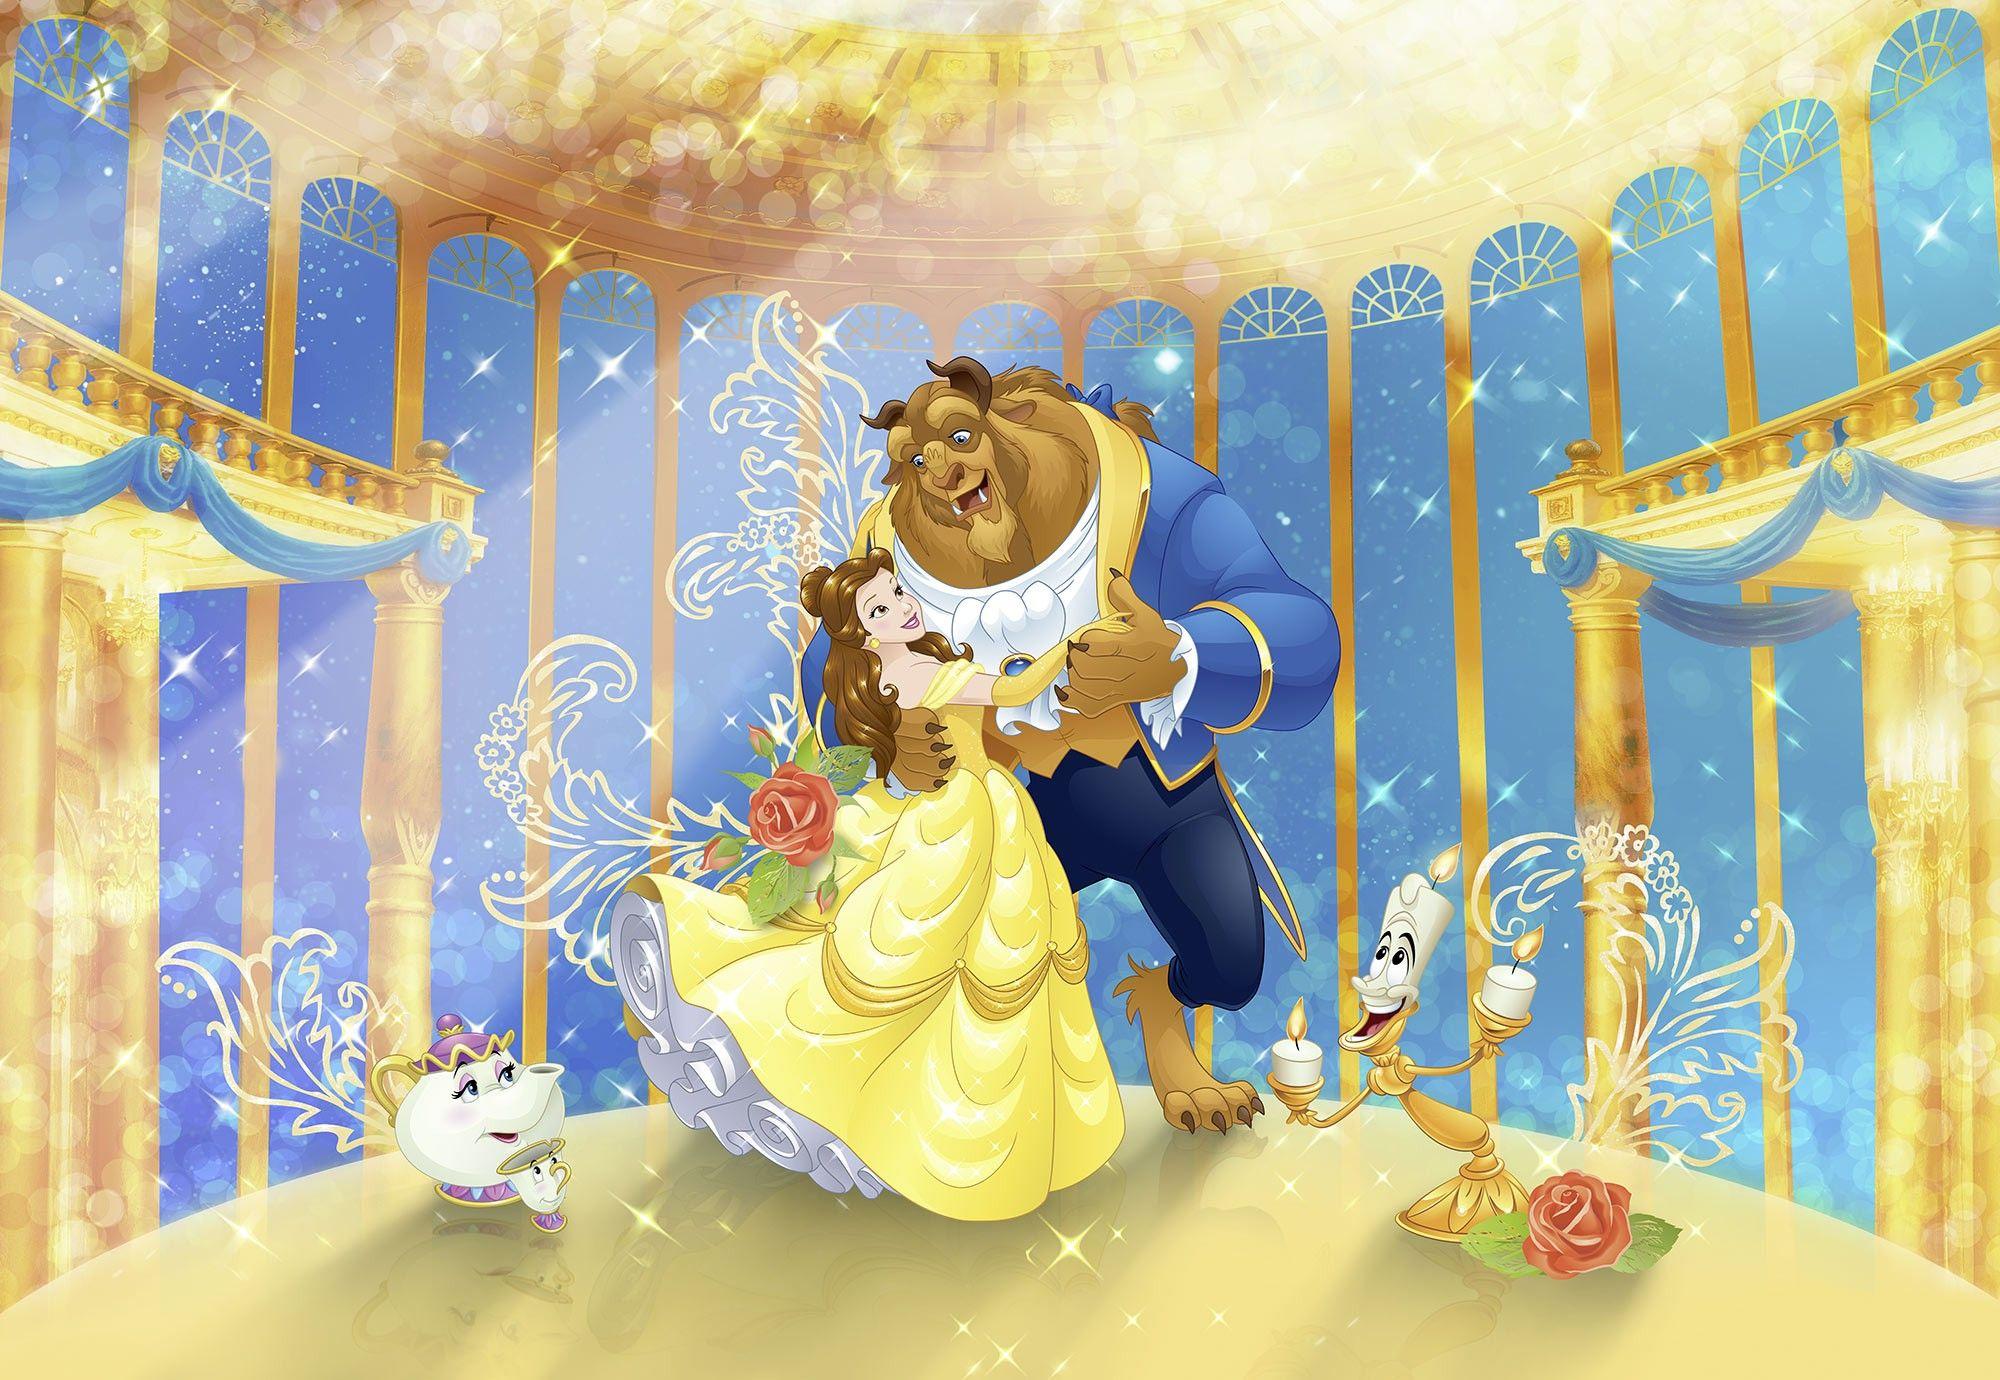 Disney Wallpaper mural for children's bedroom Beauty and the Beast